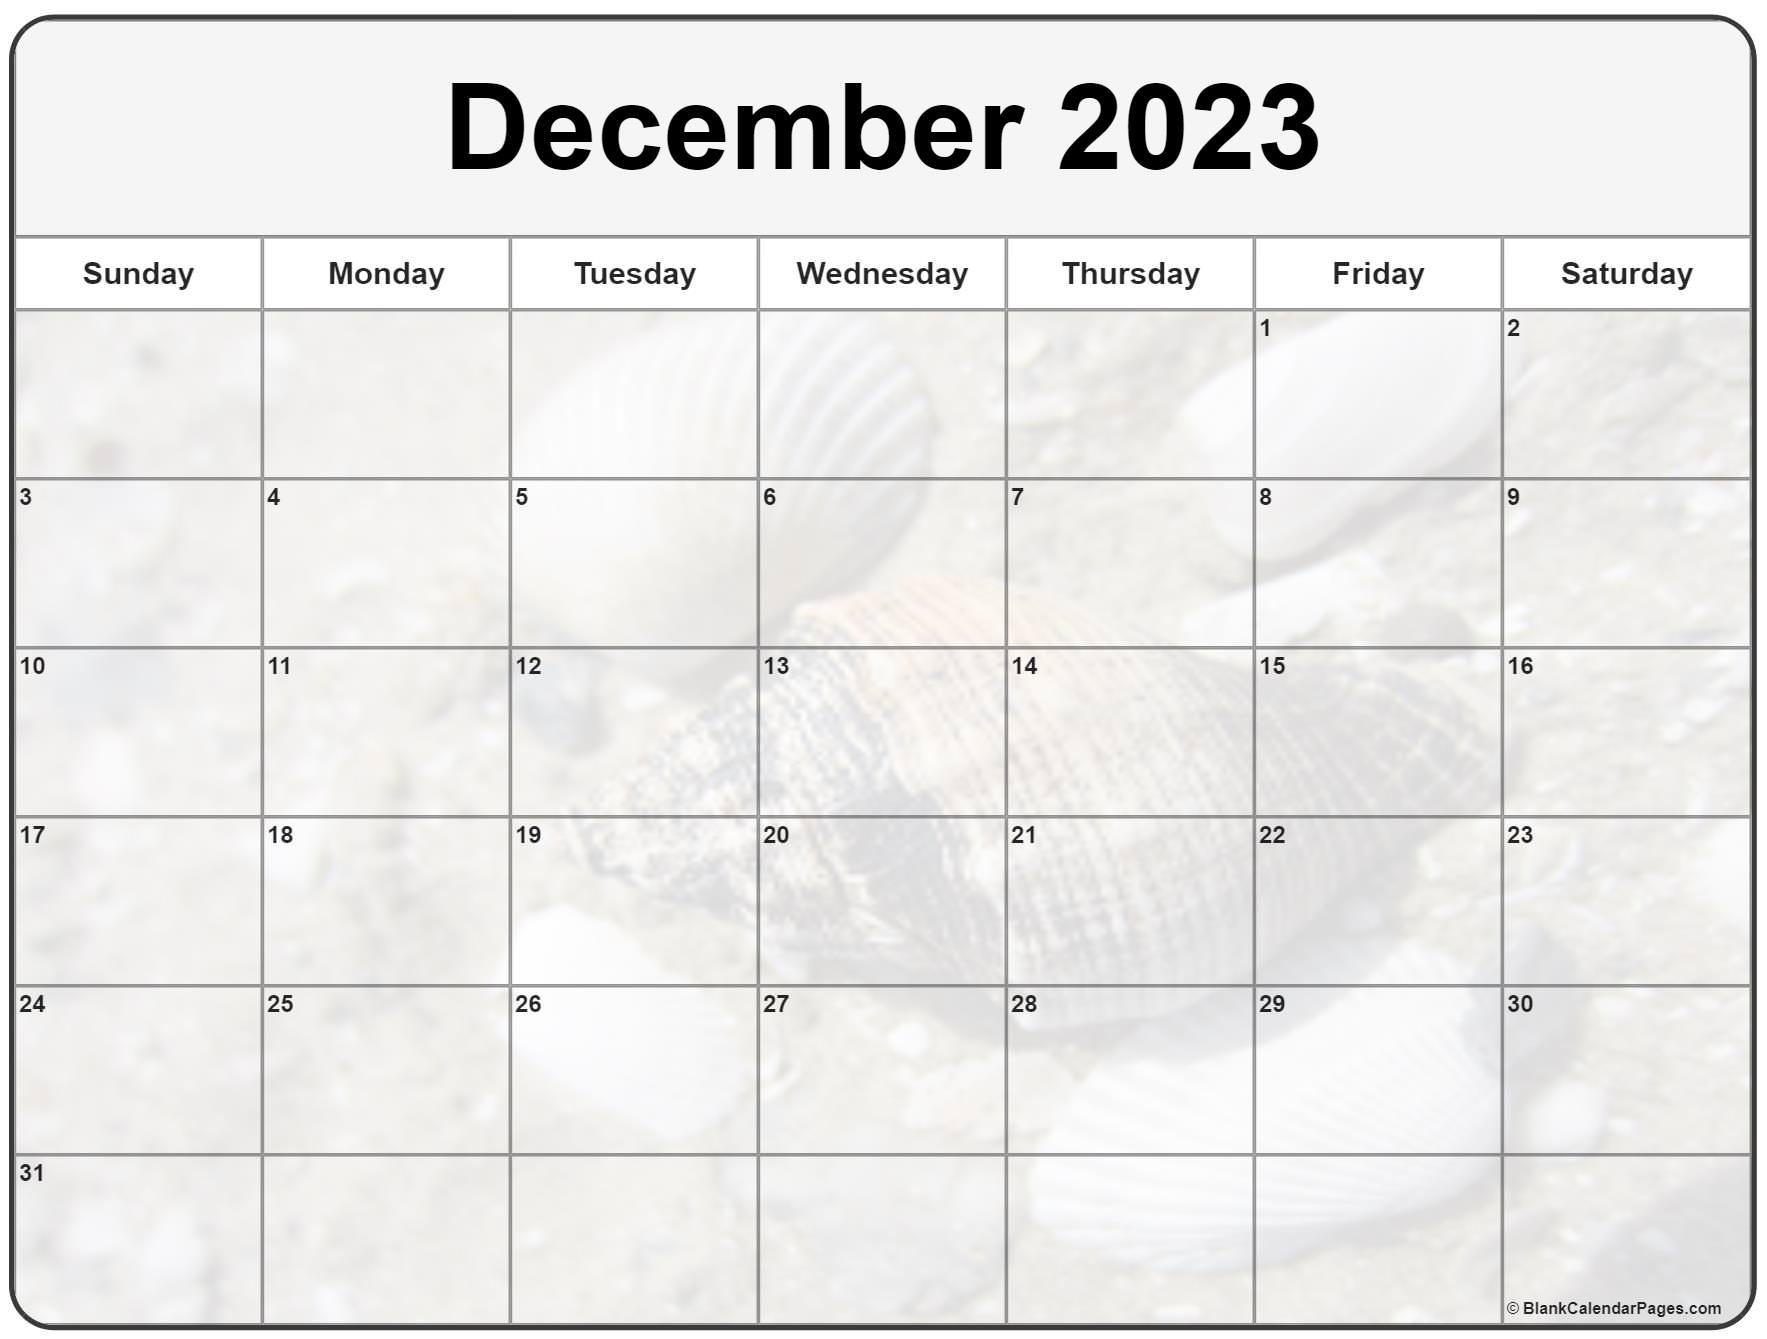 december-2023-holidays-2023-calendar